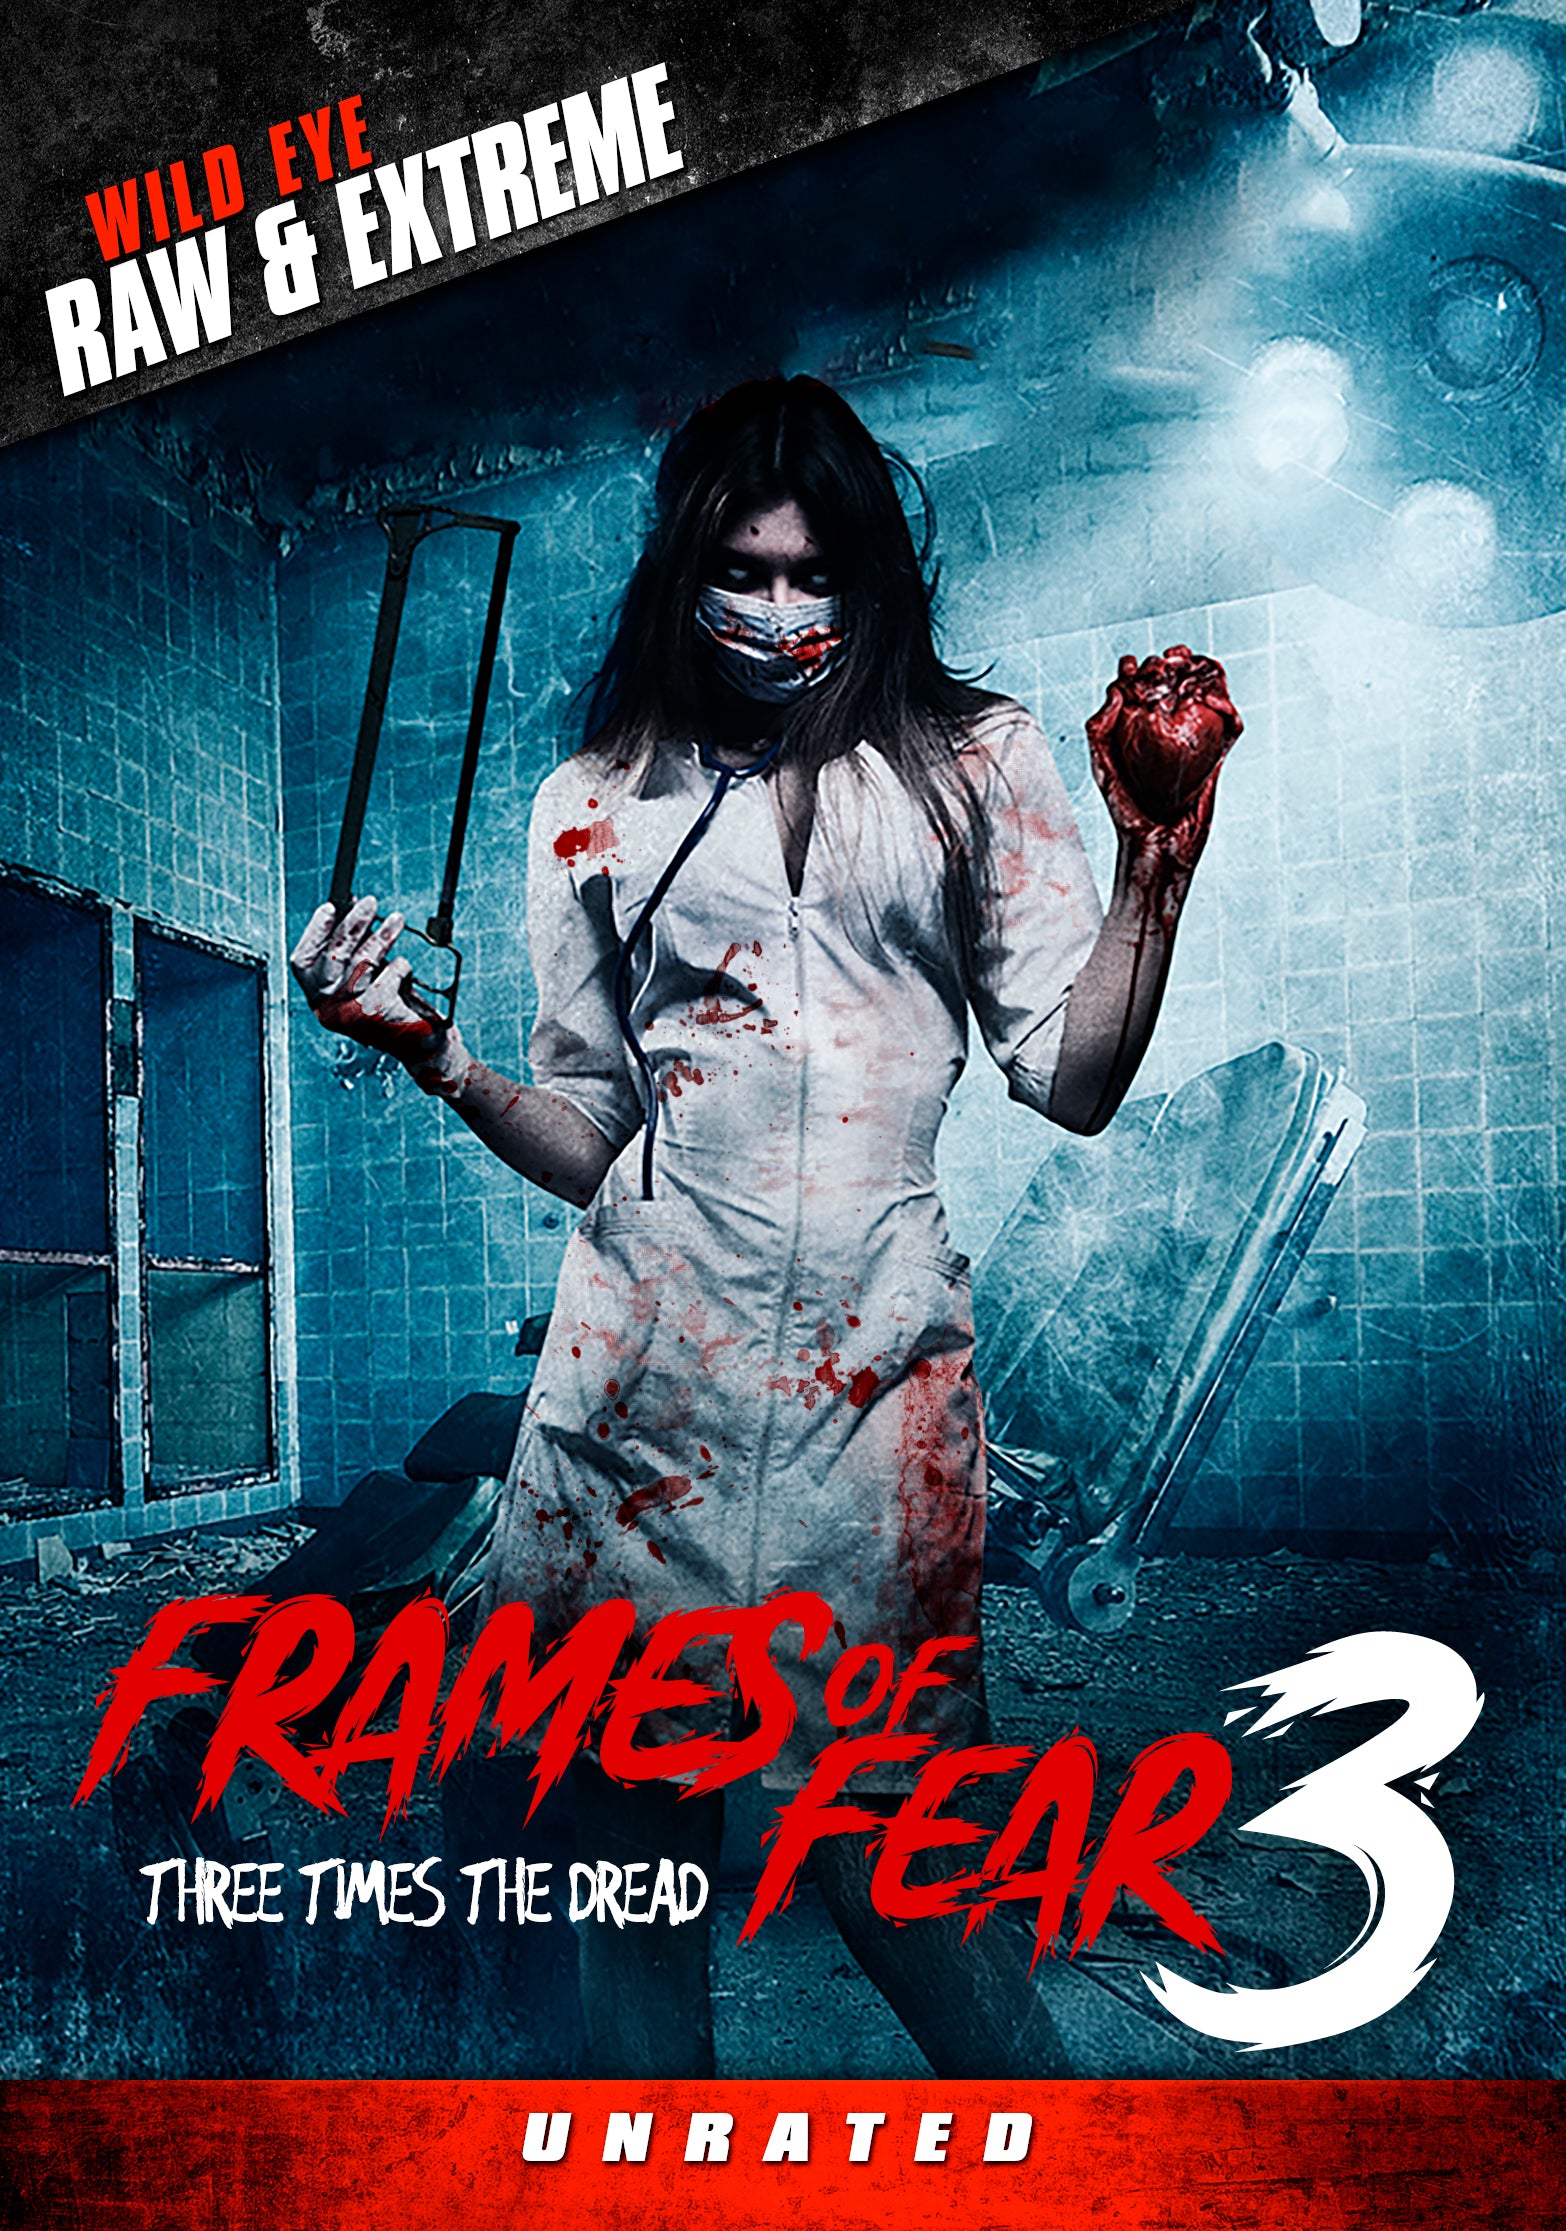 FRAMES OF FEAR 3 DVD